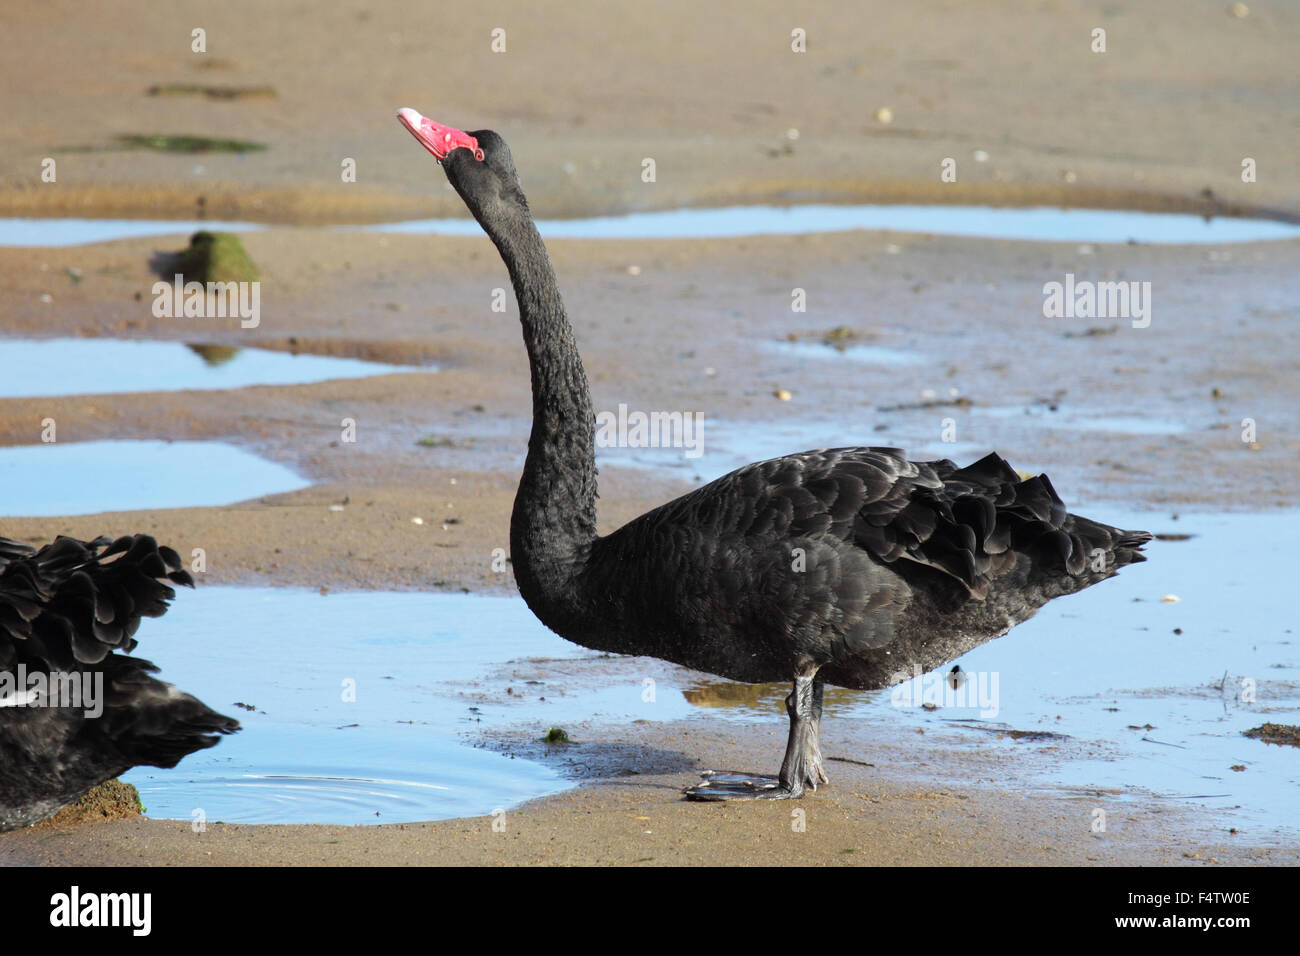 Black Swan (Cygnus olor) am Ufer des Sees King in Lakes Entrance, Victoria, Australien. Stockfoto